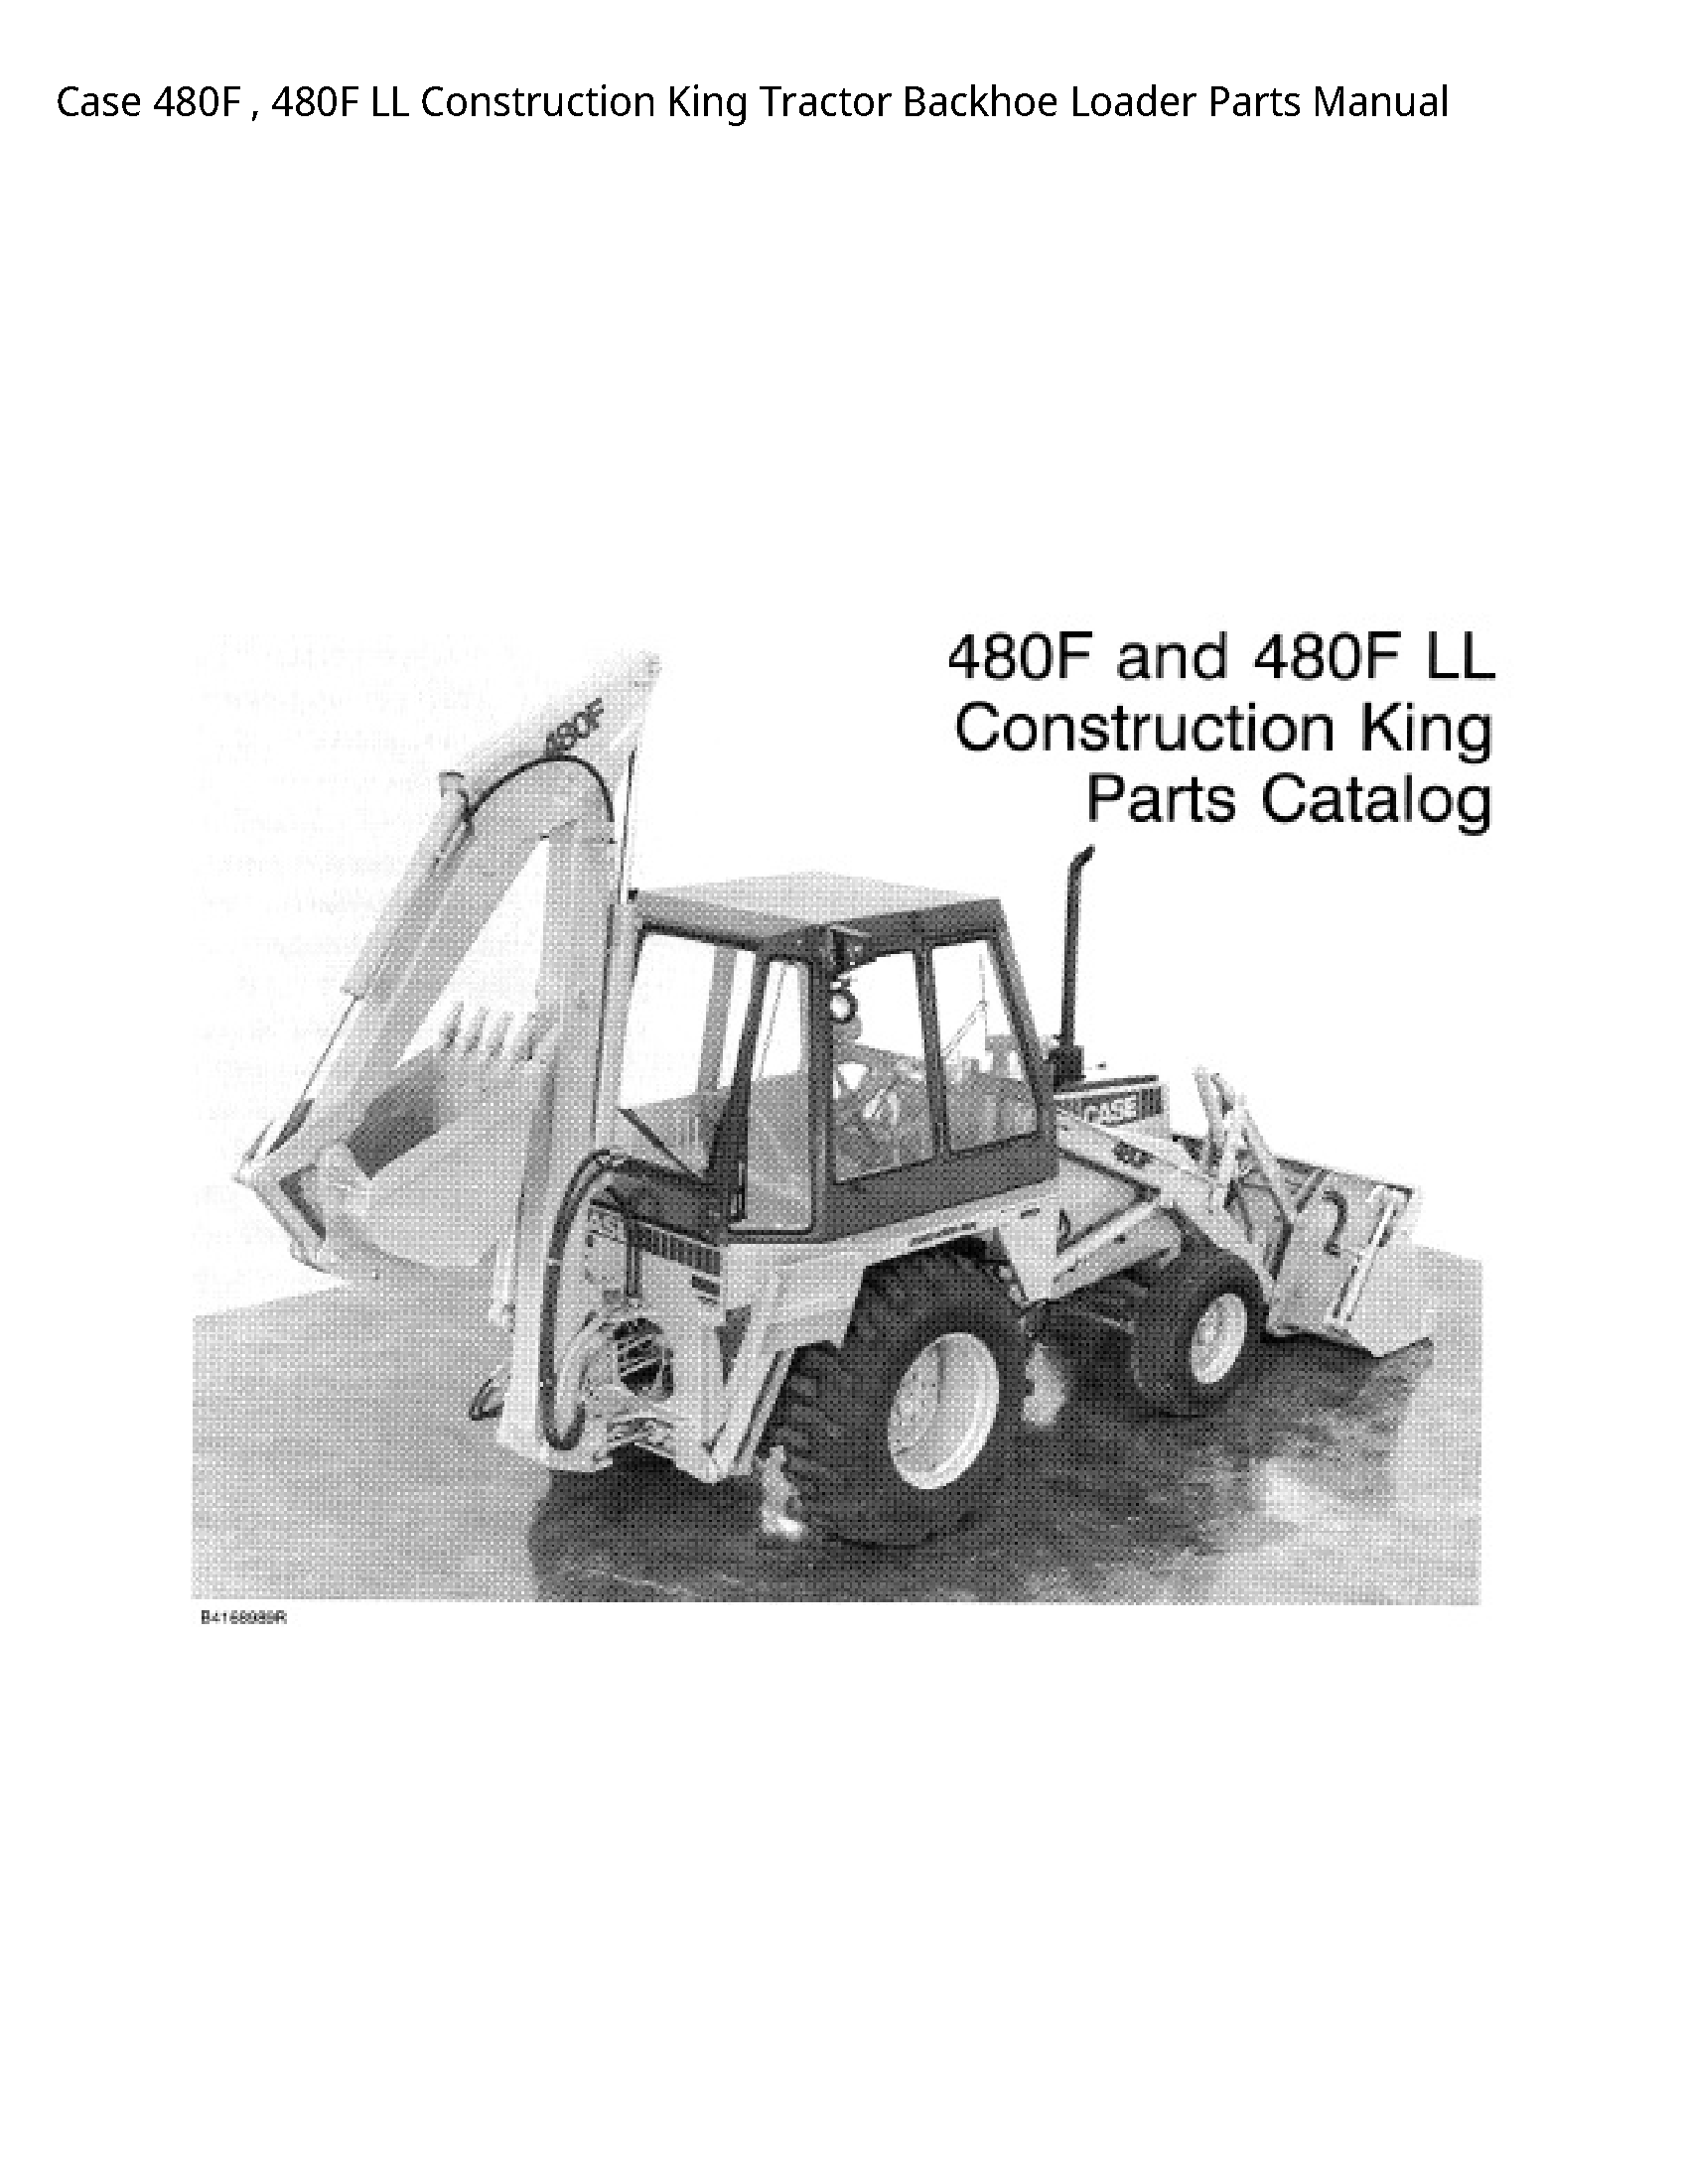 Case/Case IH 480F LL Construction King Tractor Backhoe Loader Parts manual